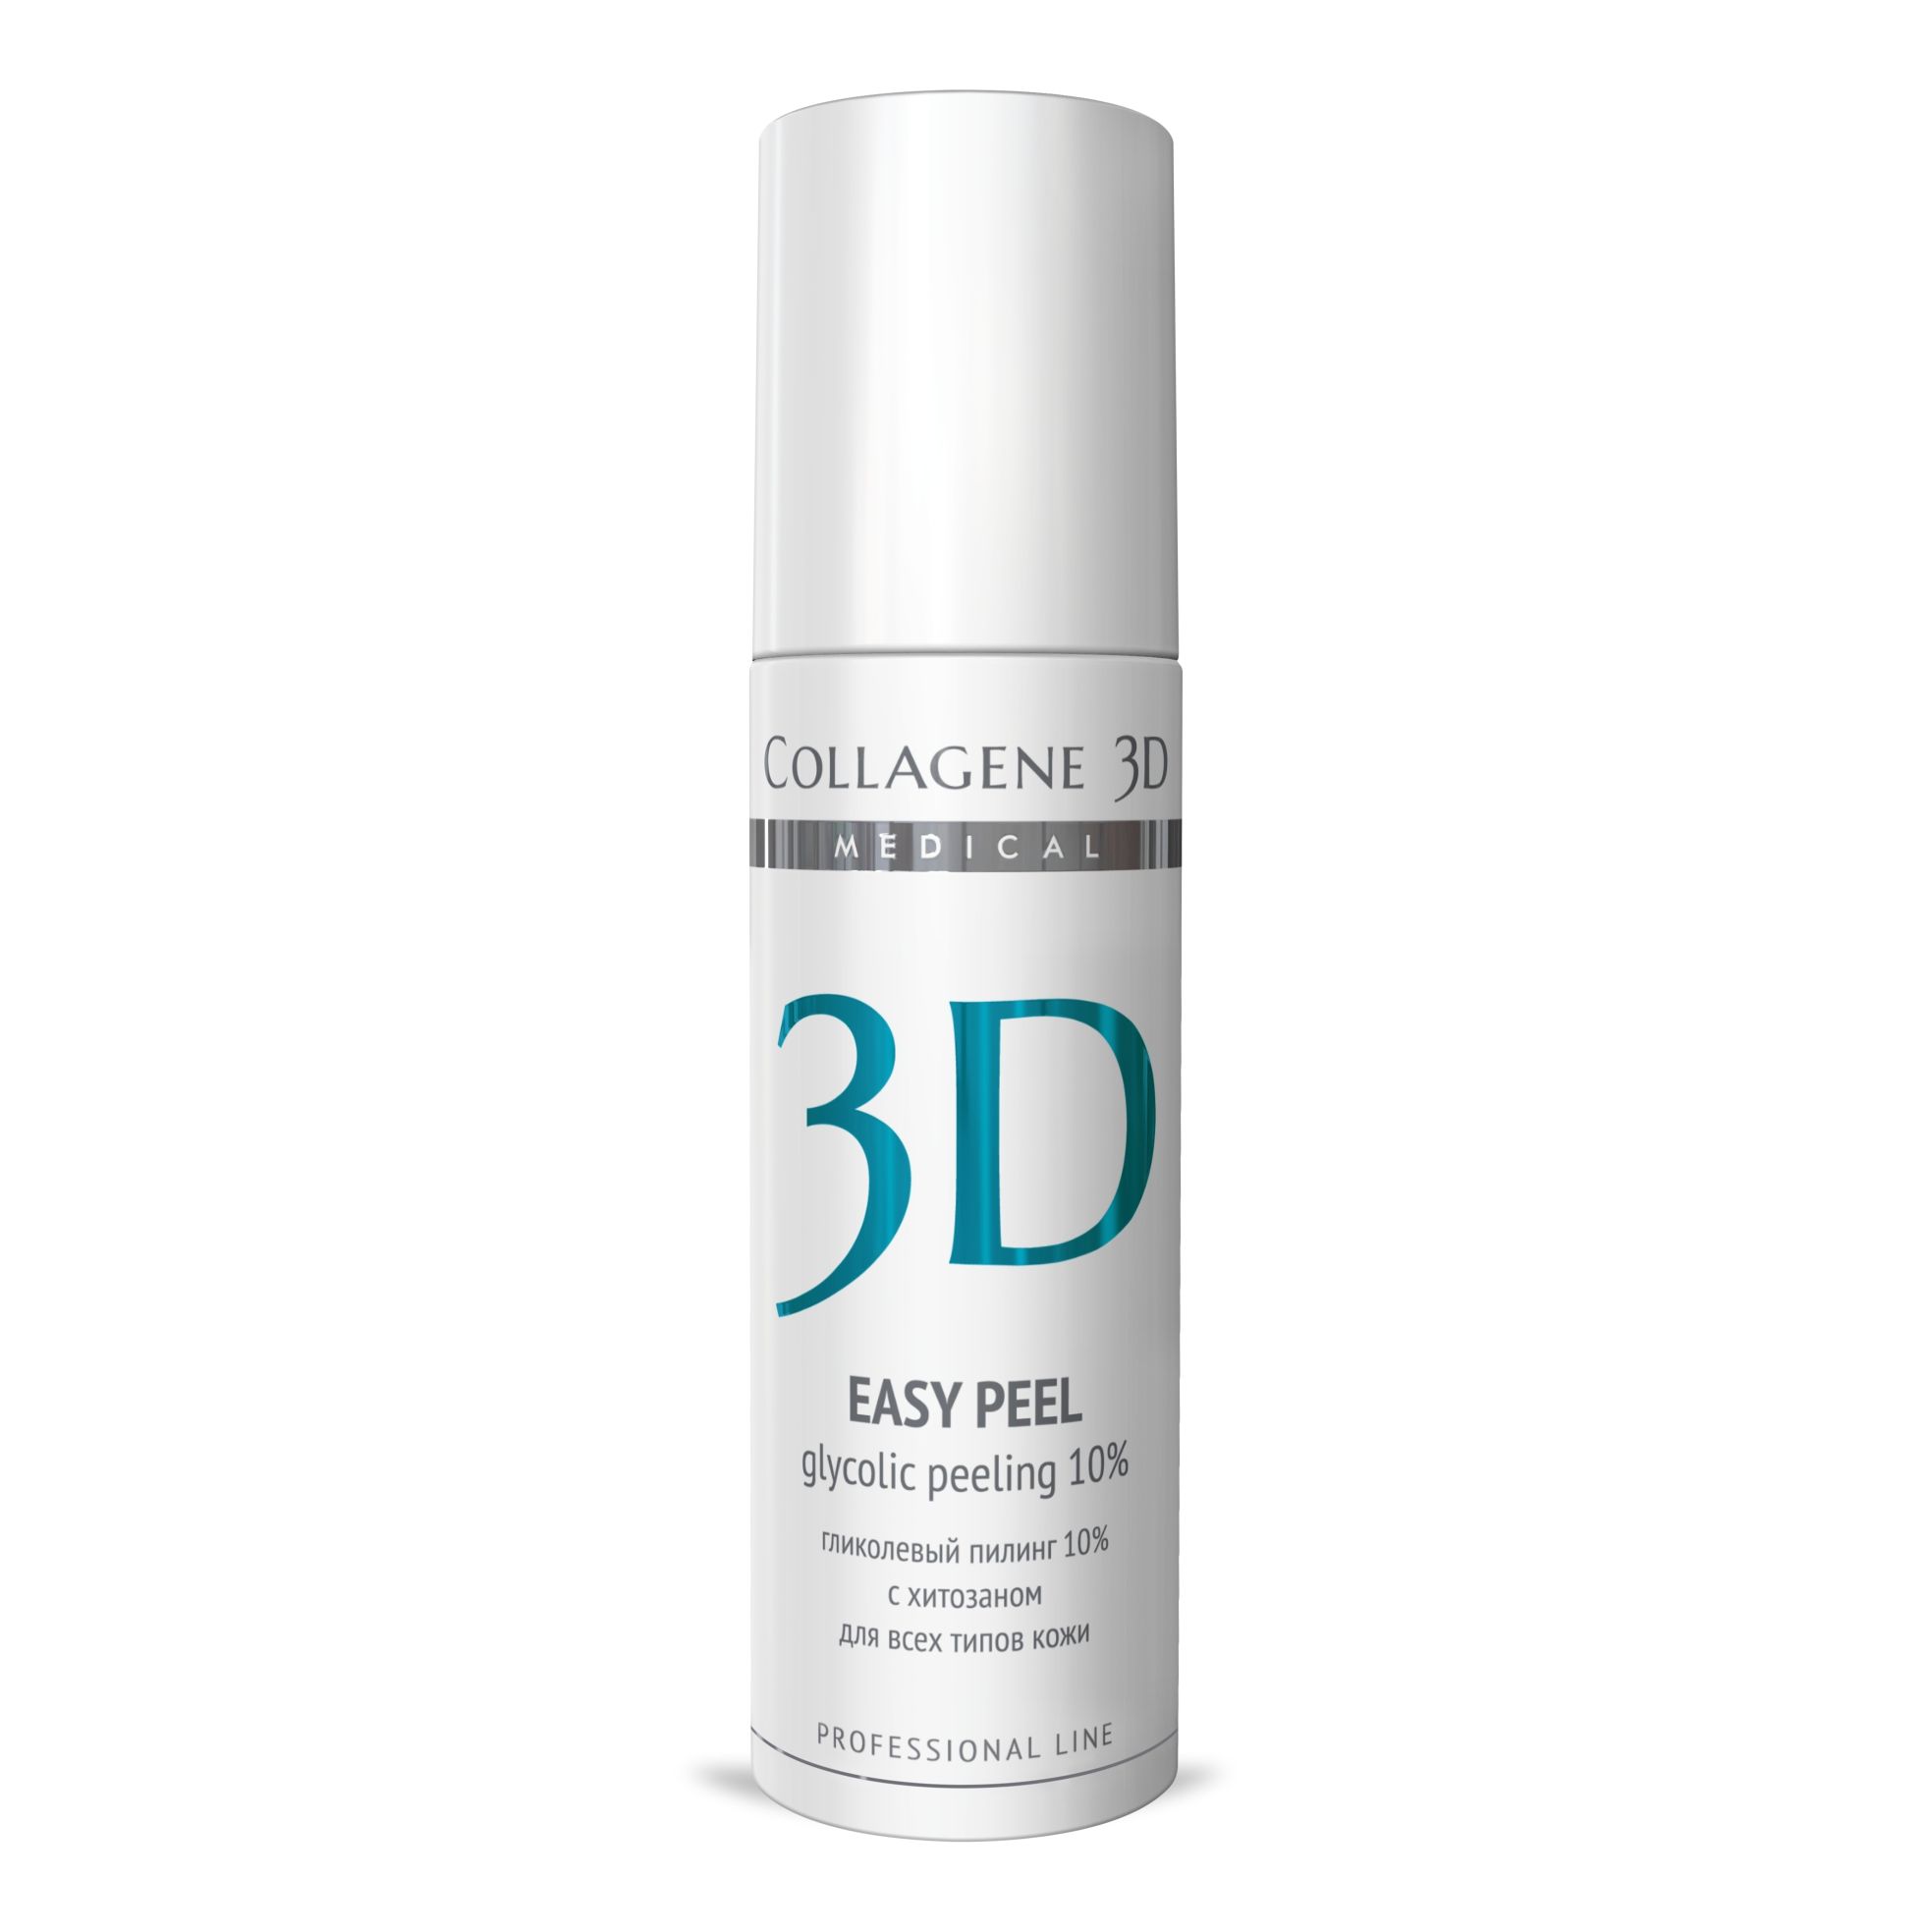 Пилинг для лица Medical Collagene 3D Easy Peel Glicolic Peeling 10% 130 мл medical collagene 3d фитотоник natural fresh 250 мл